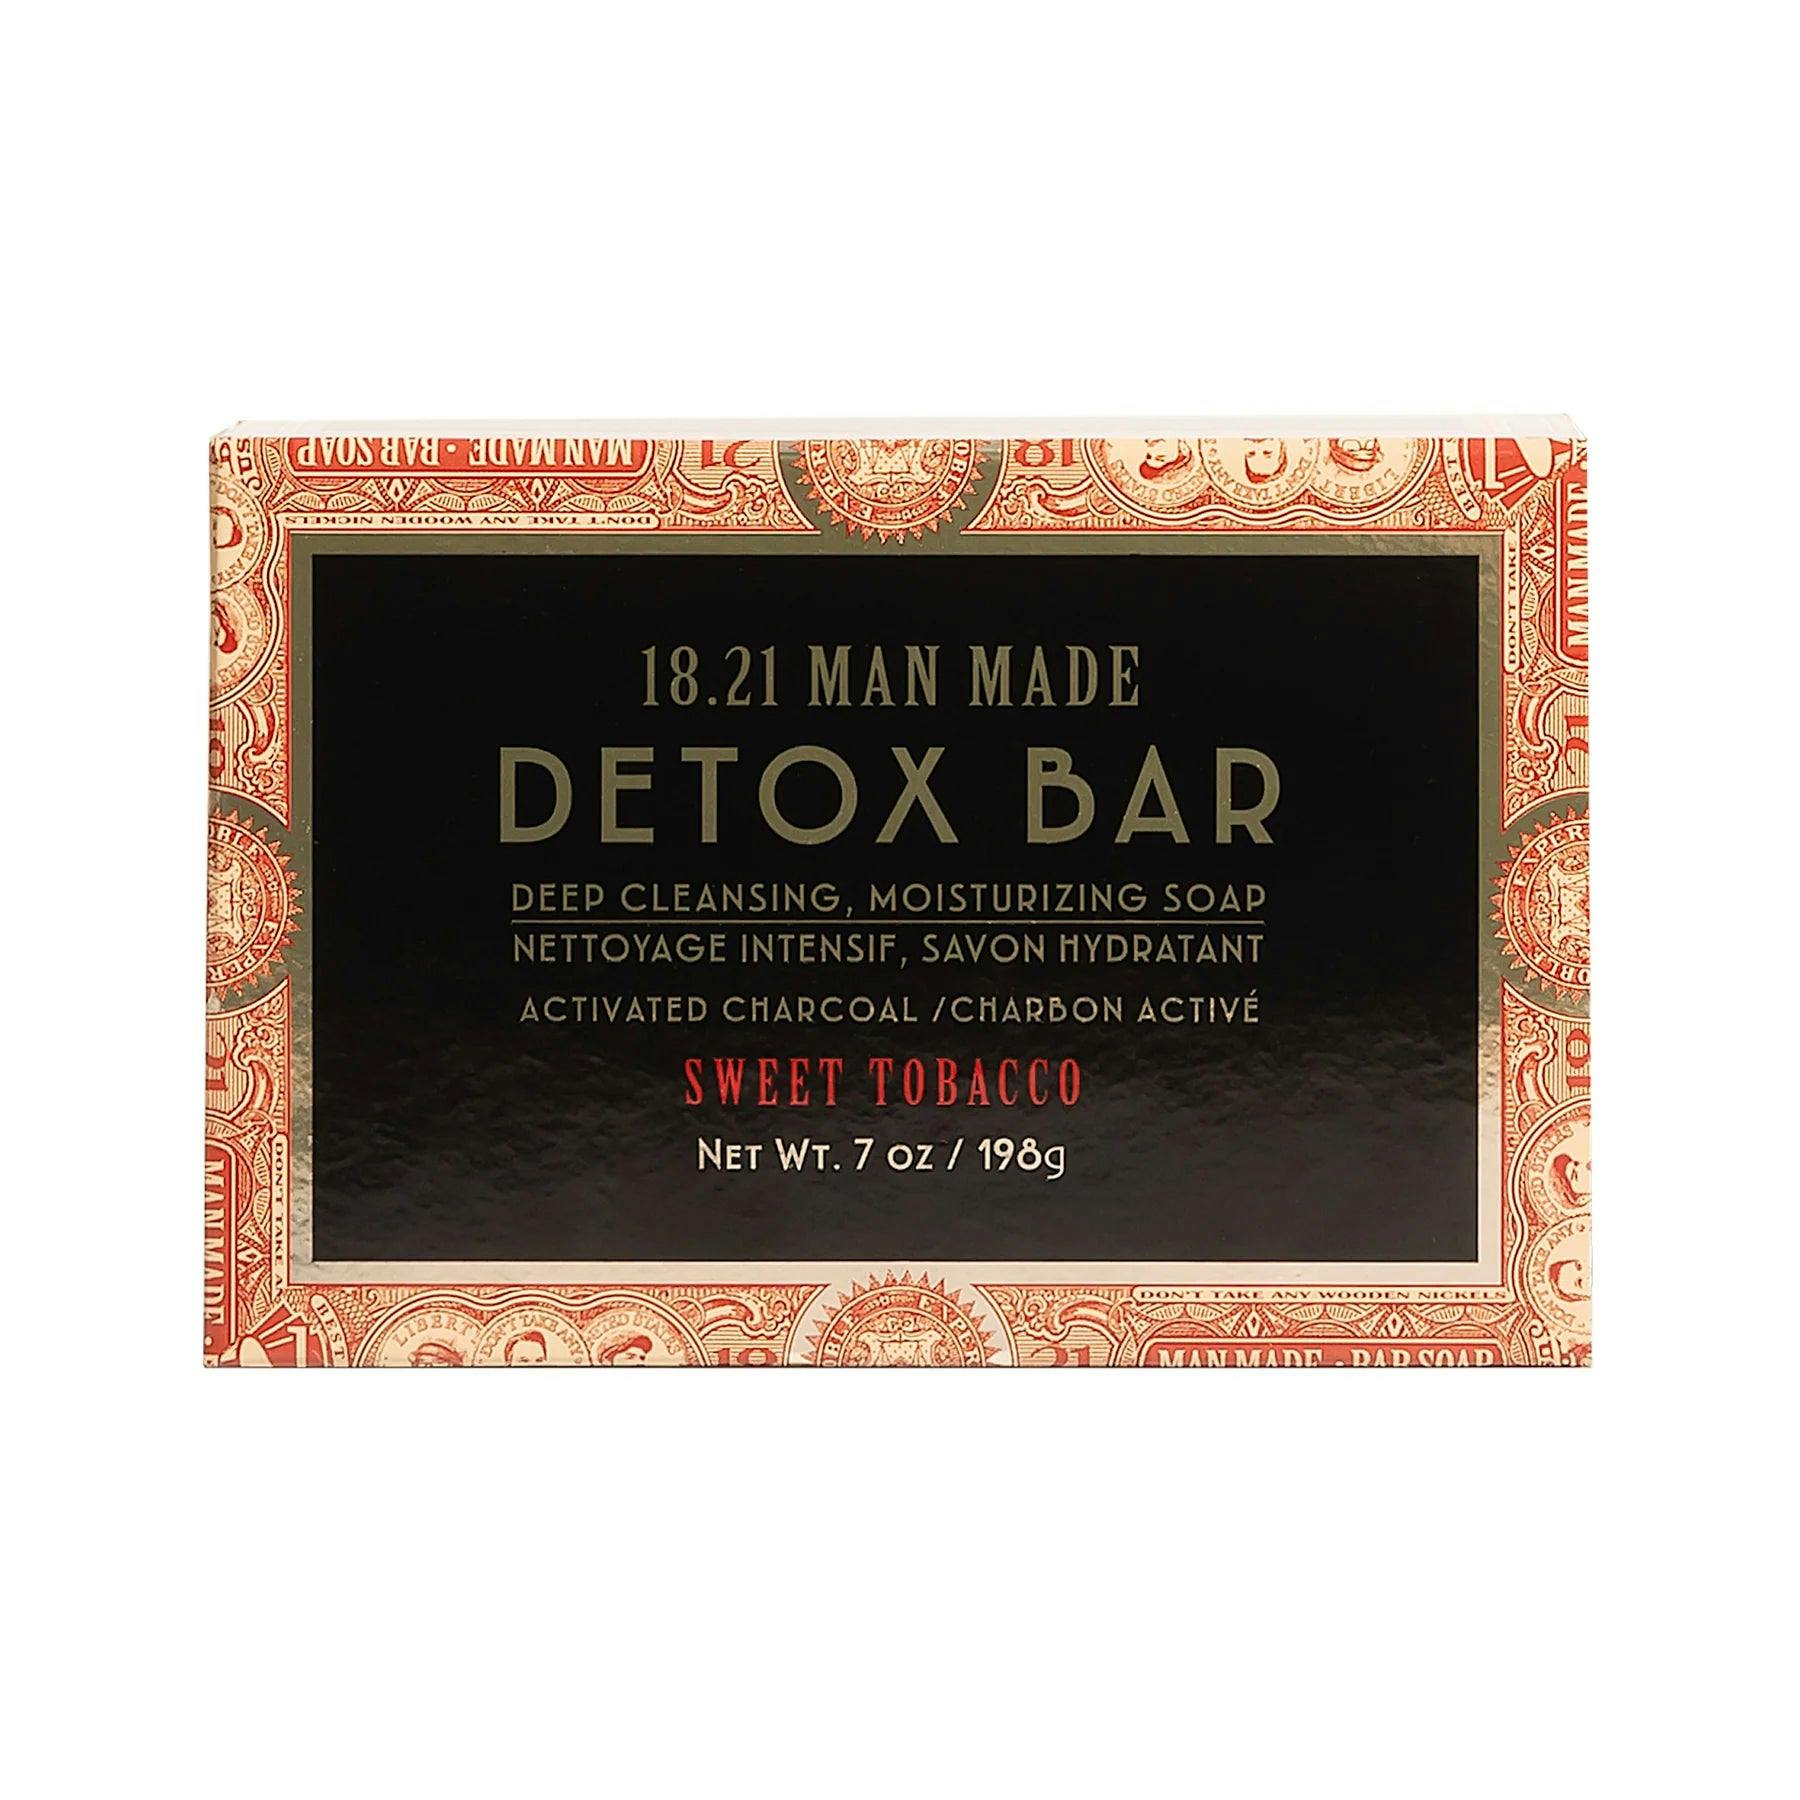 18.21 Man Made Detox bar - Sweet Tobacco 198g